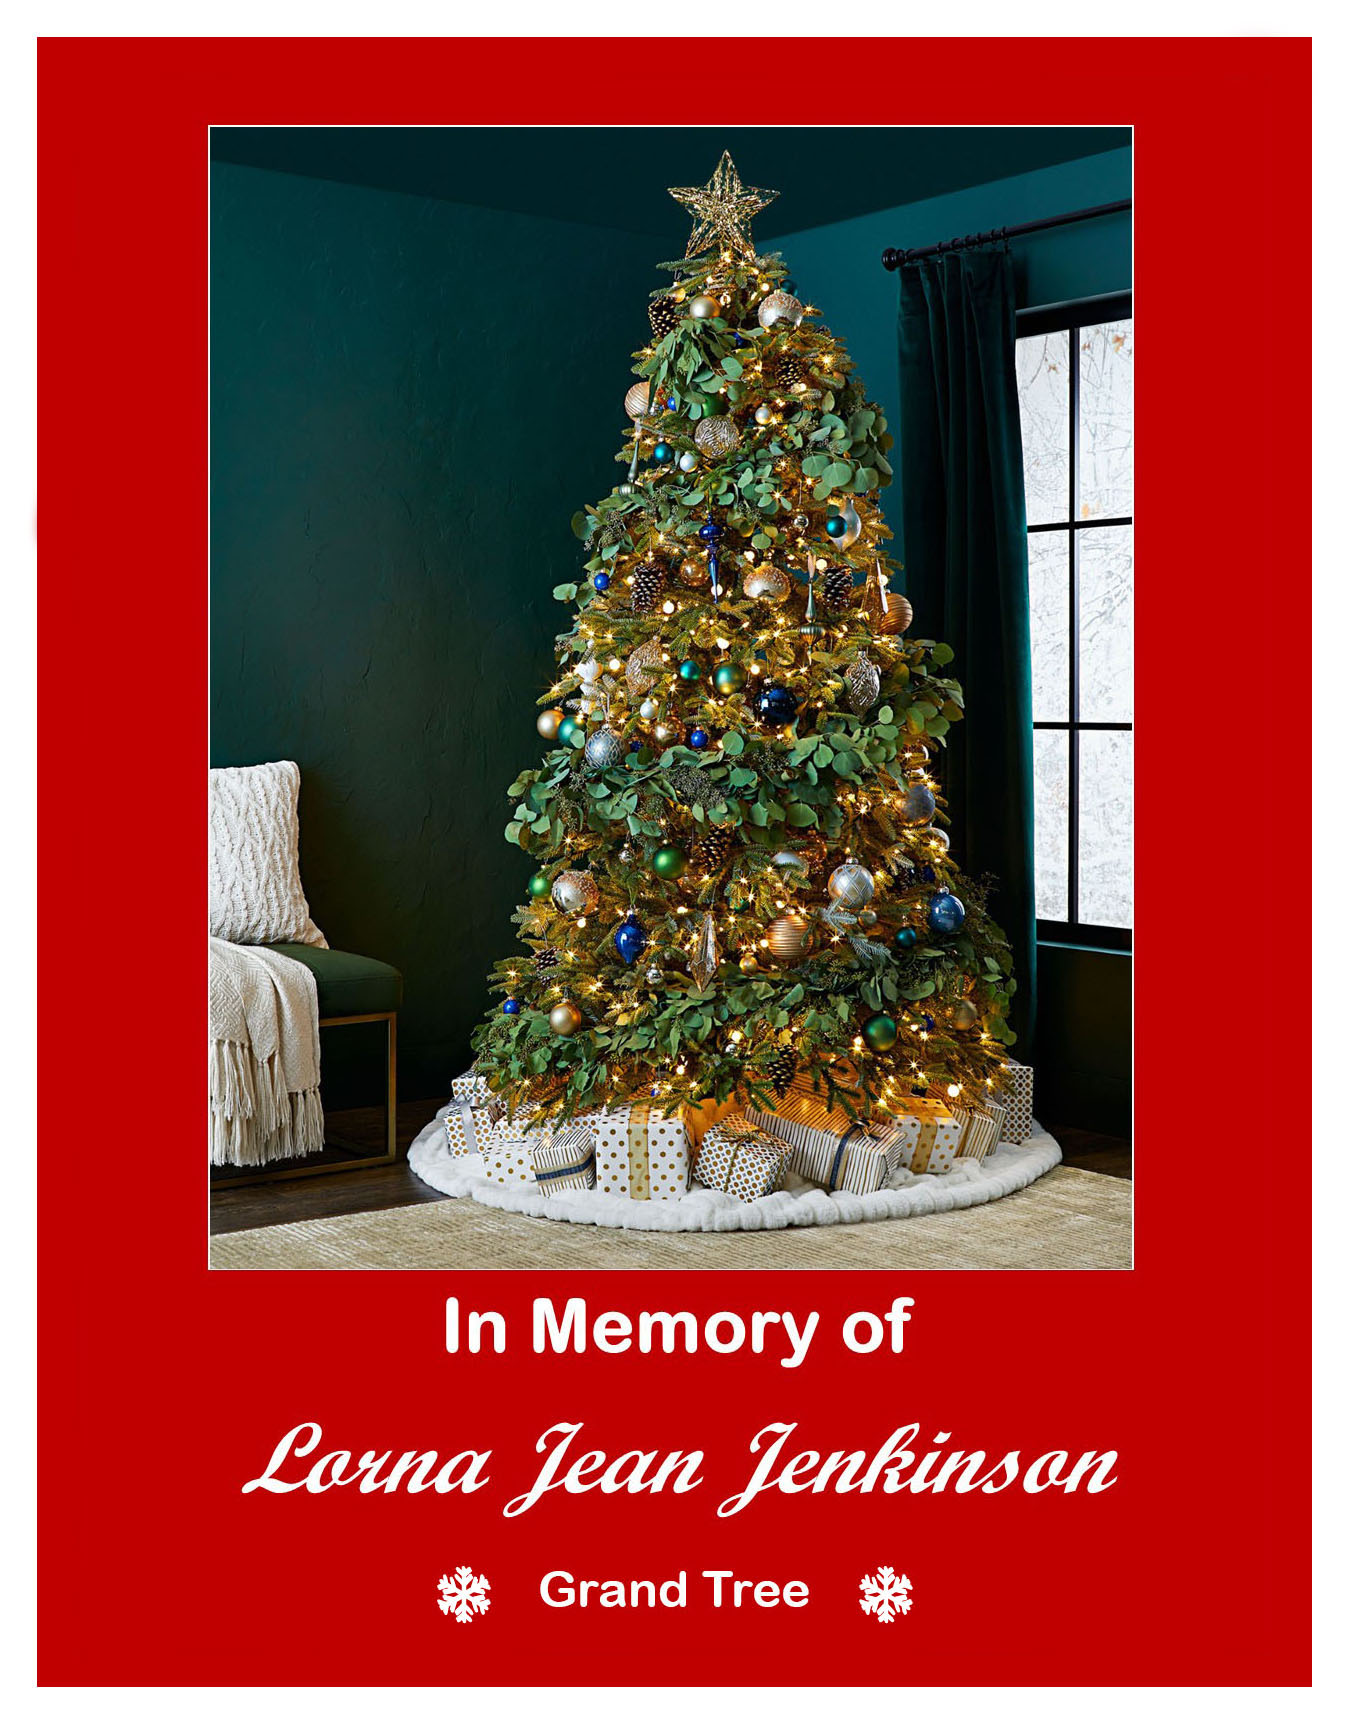 In Memory of Laura Jean Jenkinson